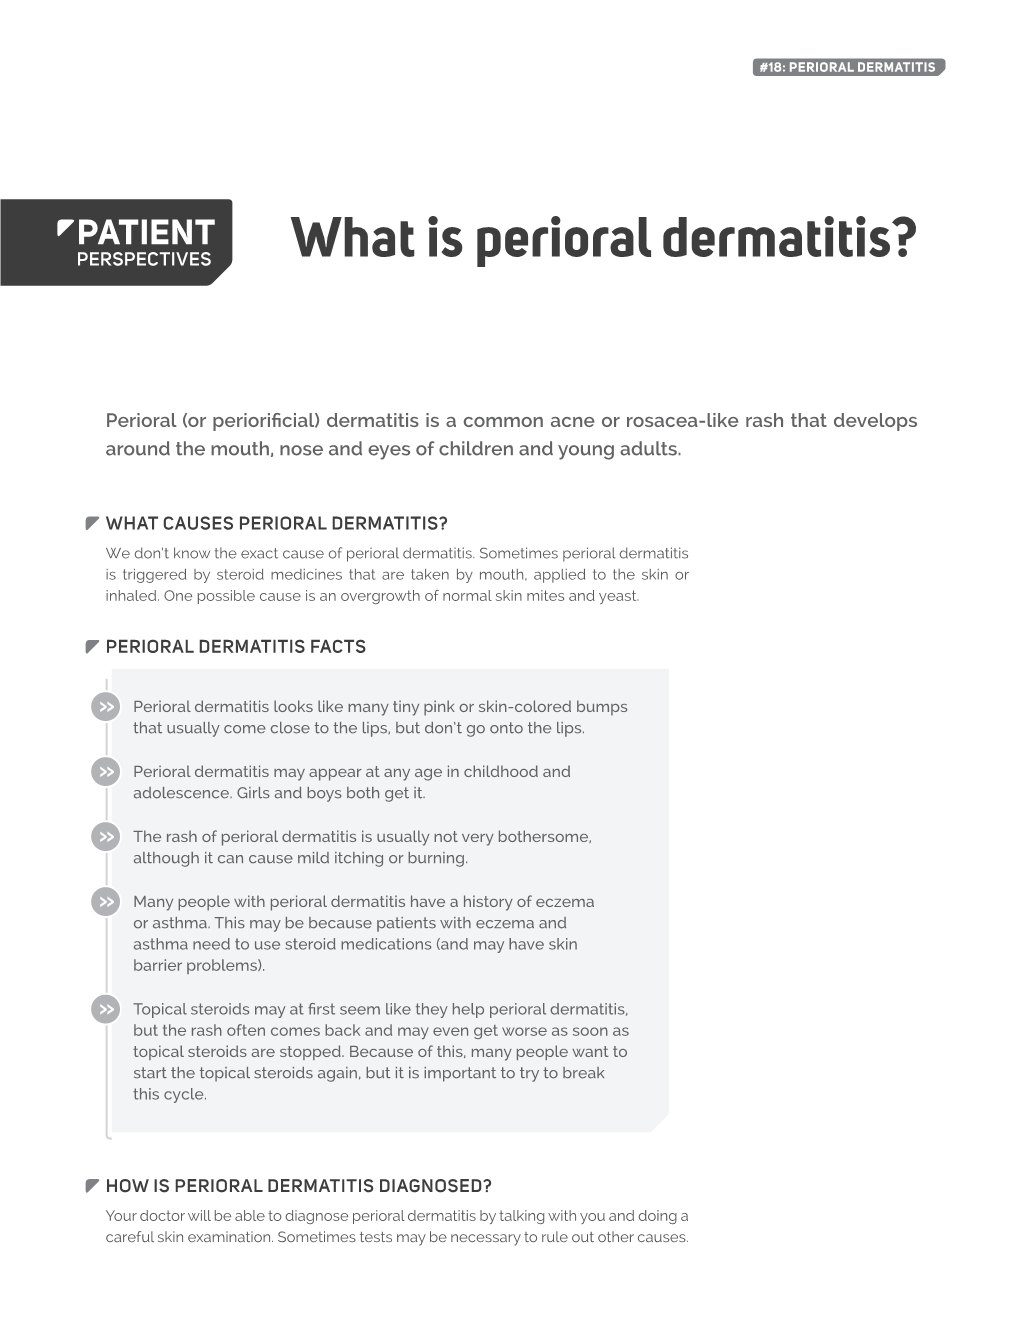 What Is Perioral Dermatitis?